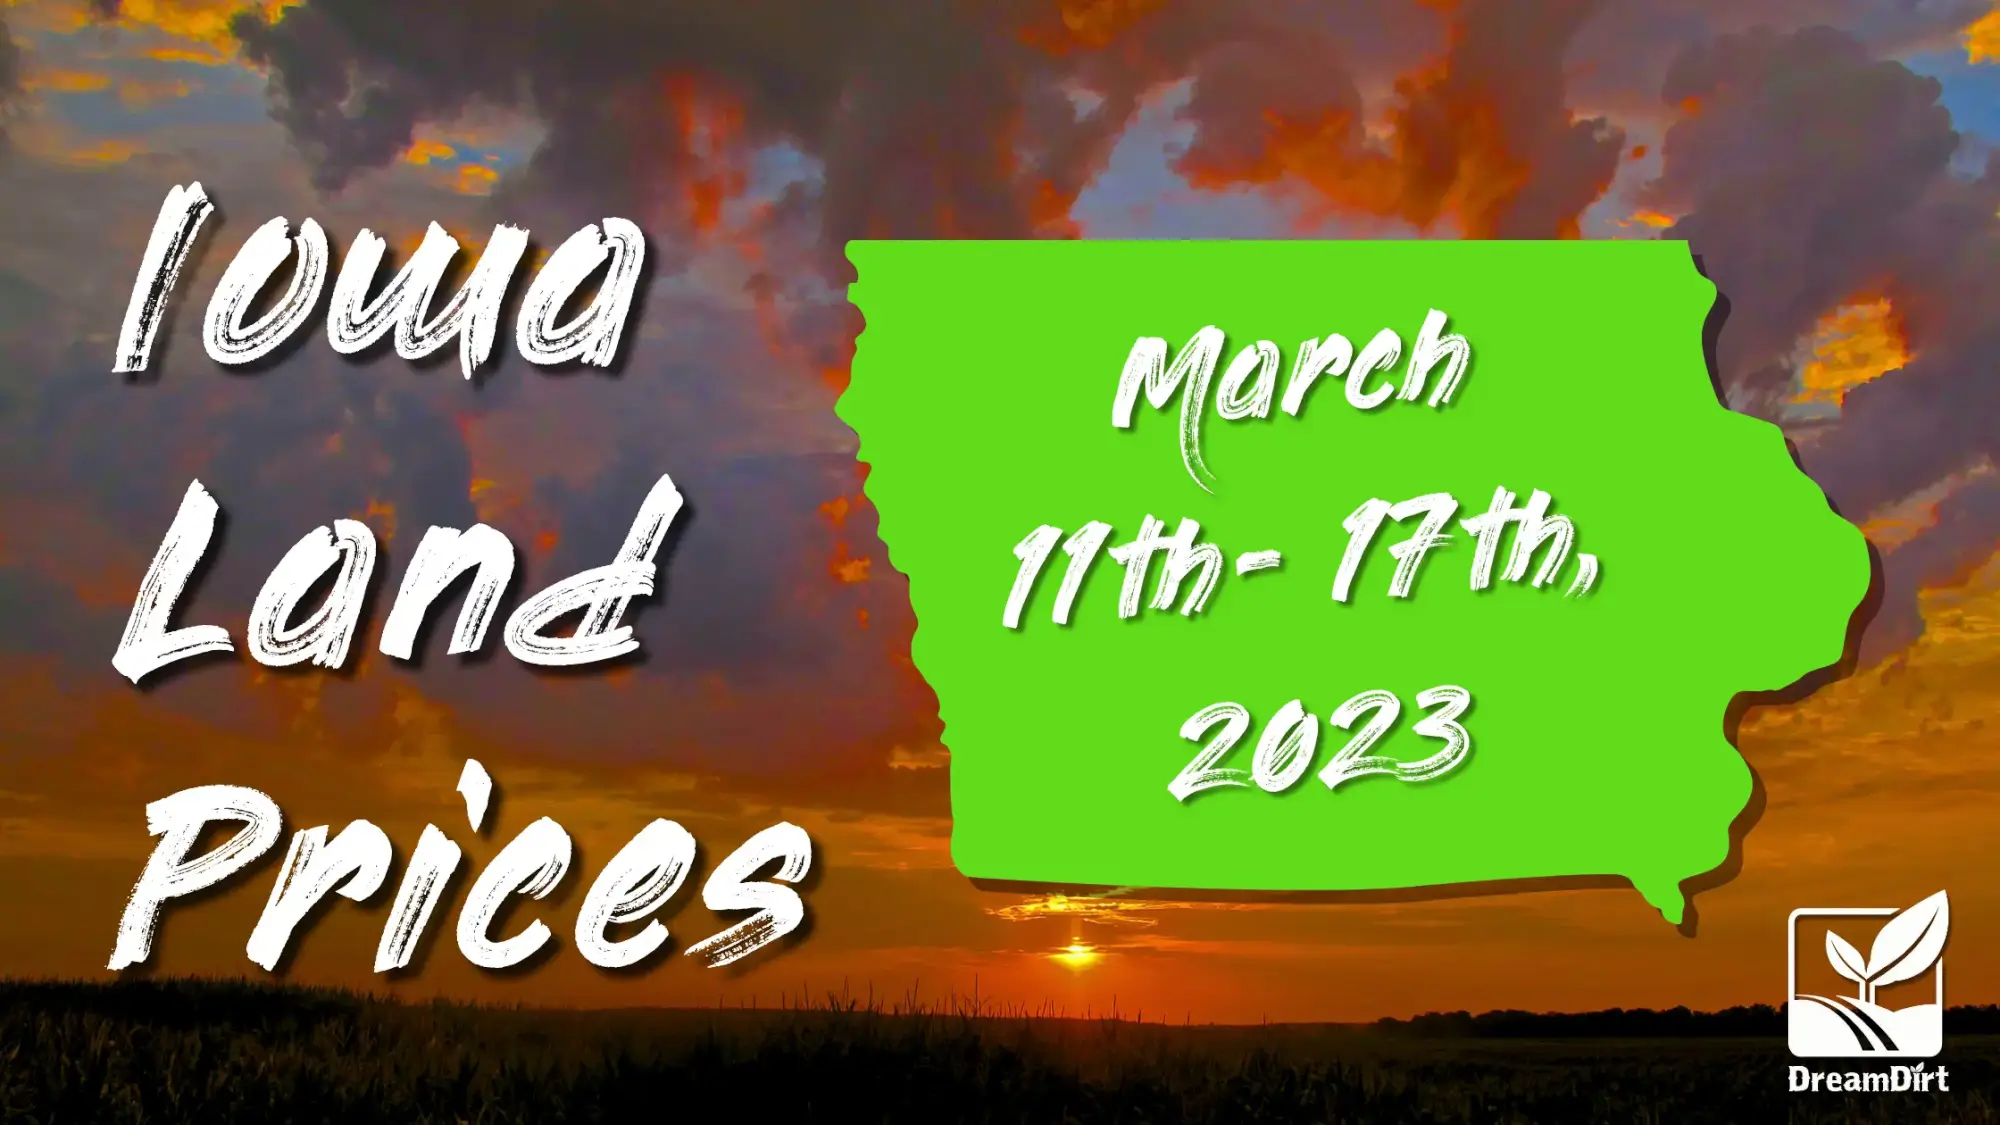 Iowa land prices March 11-17, 2023